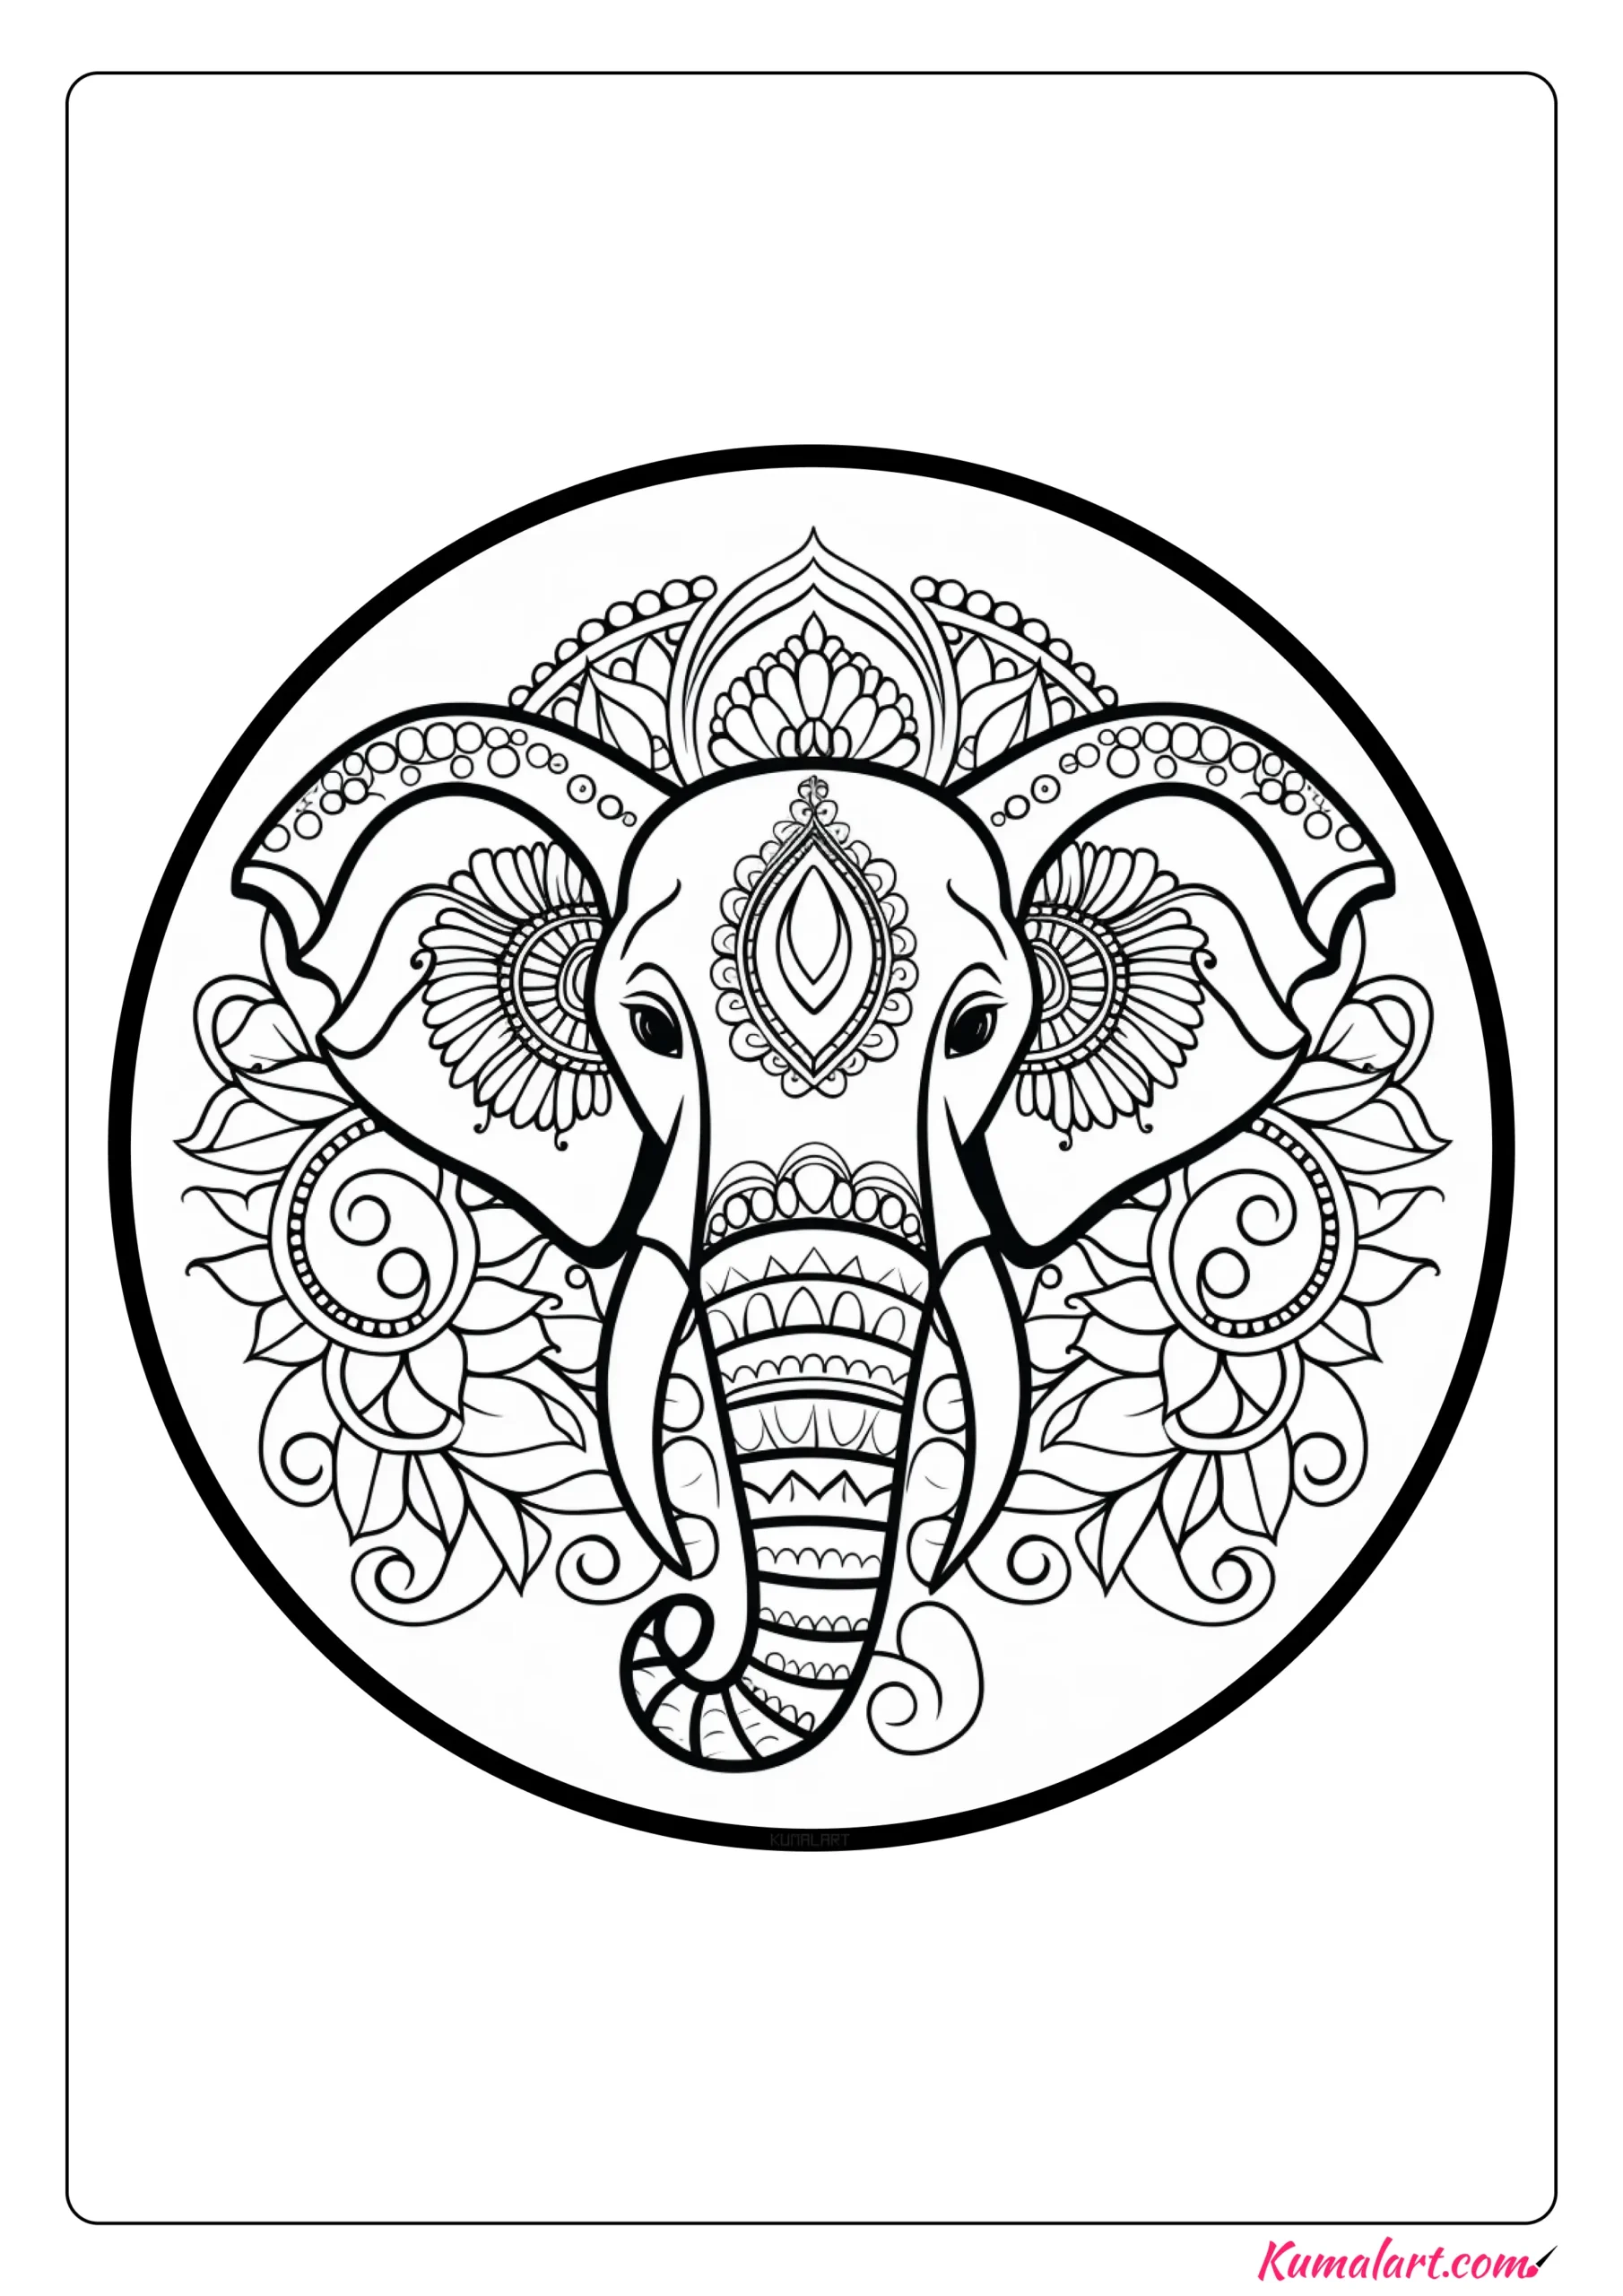 Alan the Elephant Mandala Coloring Page